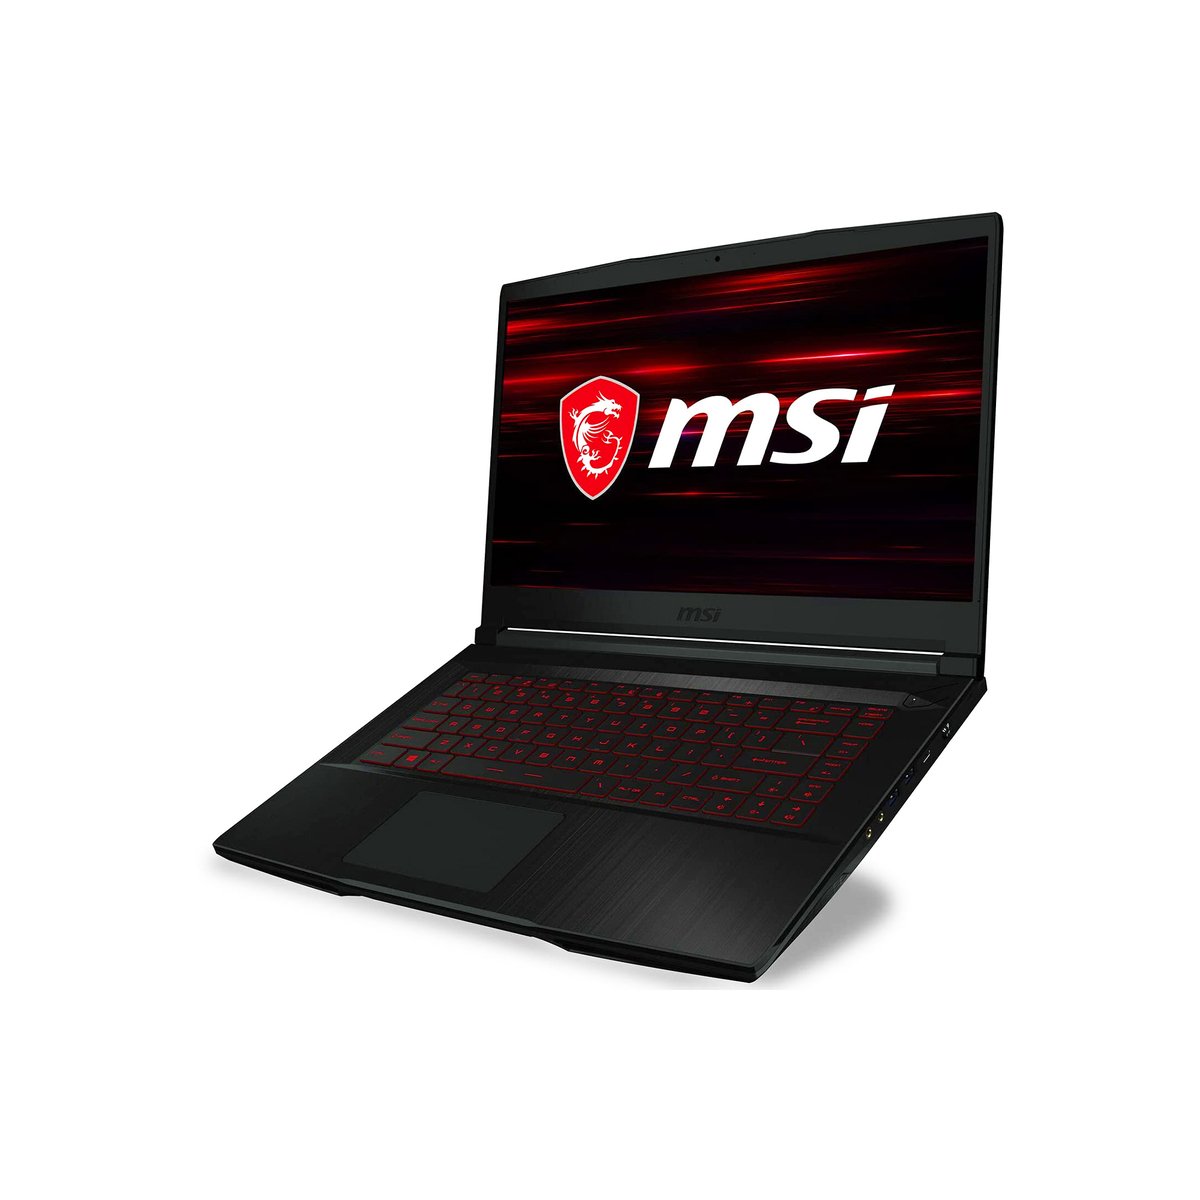 MSI Gaming Laptop NB 9S7-16R612-054 - 15.6” FHD Display, 11th Gen Intel  Core i5 -11400H, 512GB SSD, 8GB RAM, NVIDIA GeForce RTX 3050 Graphics, Black